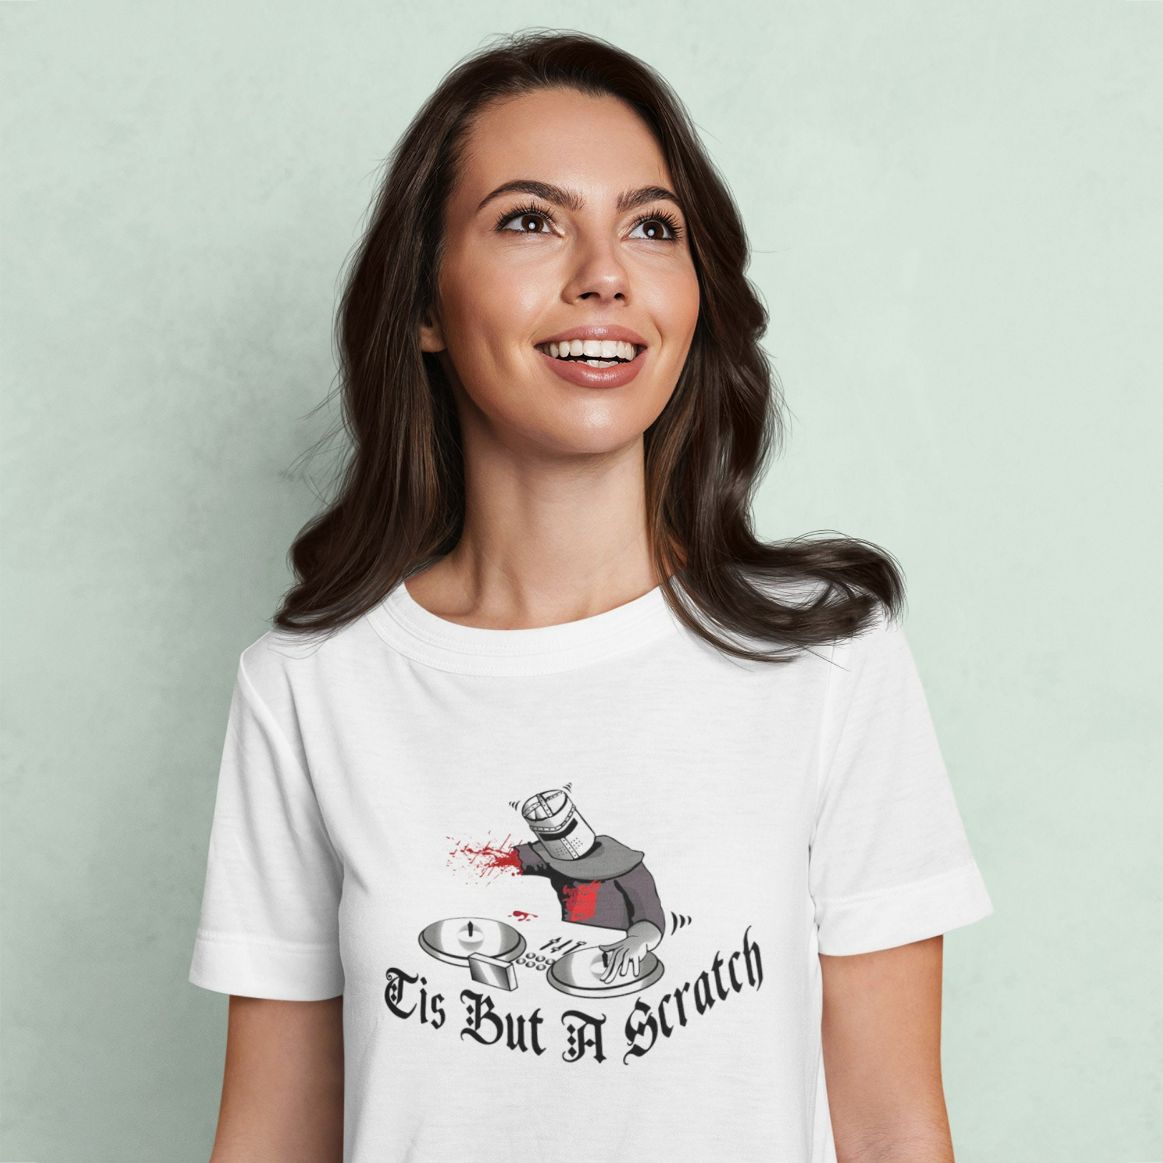 Tis But A Scratch  Monty Python Inspired T-Shirt